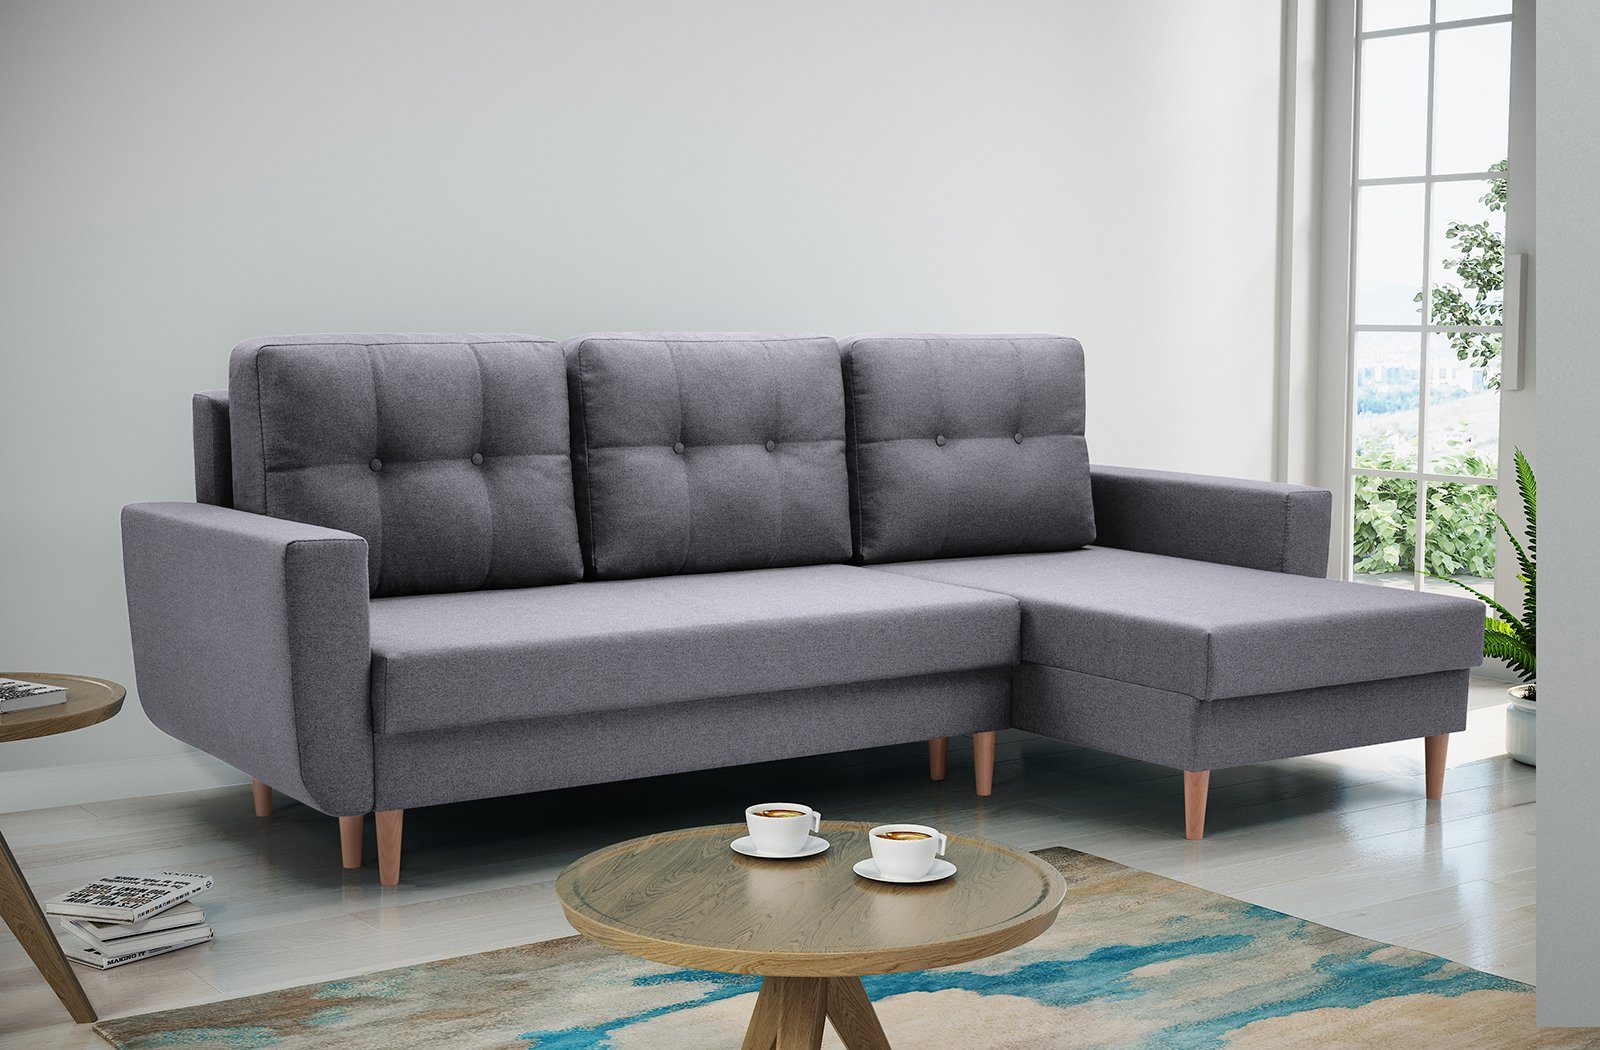 Beautysofa Polsterecke Couch Sofa Ecksofa ONLY, mit Schlaffunktion, mit universelle mane Dunkelgrau (malmo new 95)